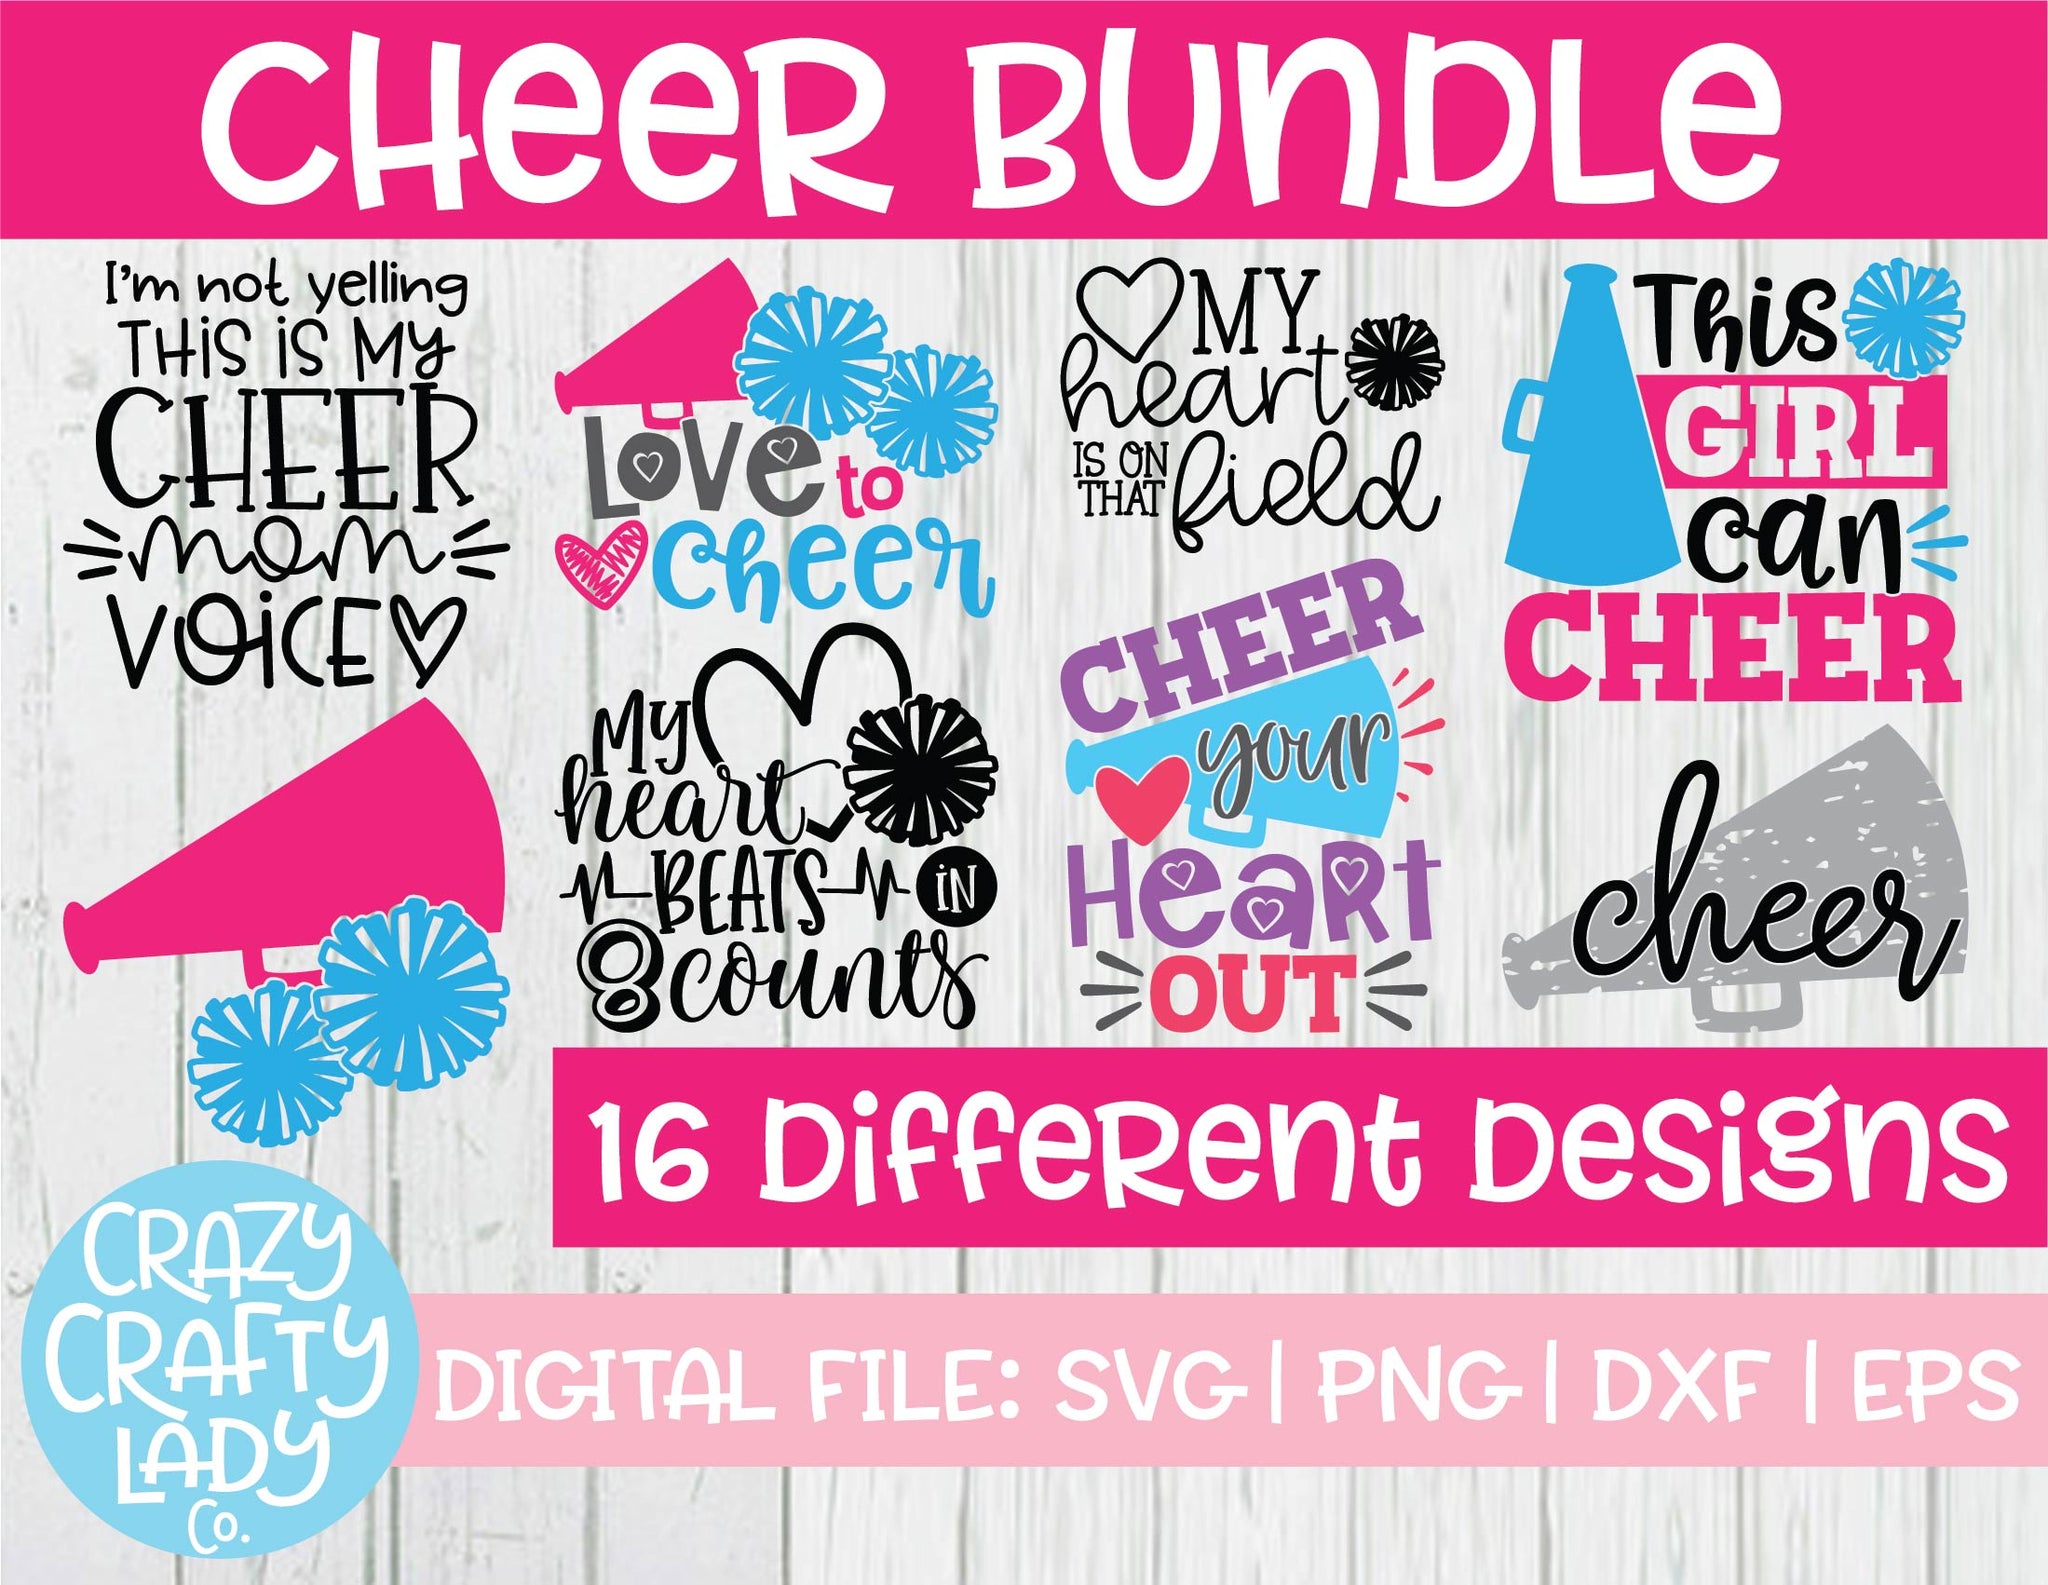 Download Cheer SVG Cut File Bundle - Crazy Crafty Lady Co.